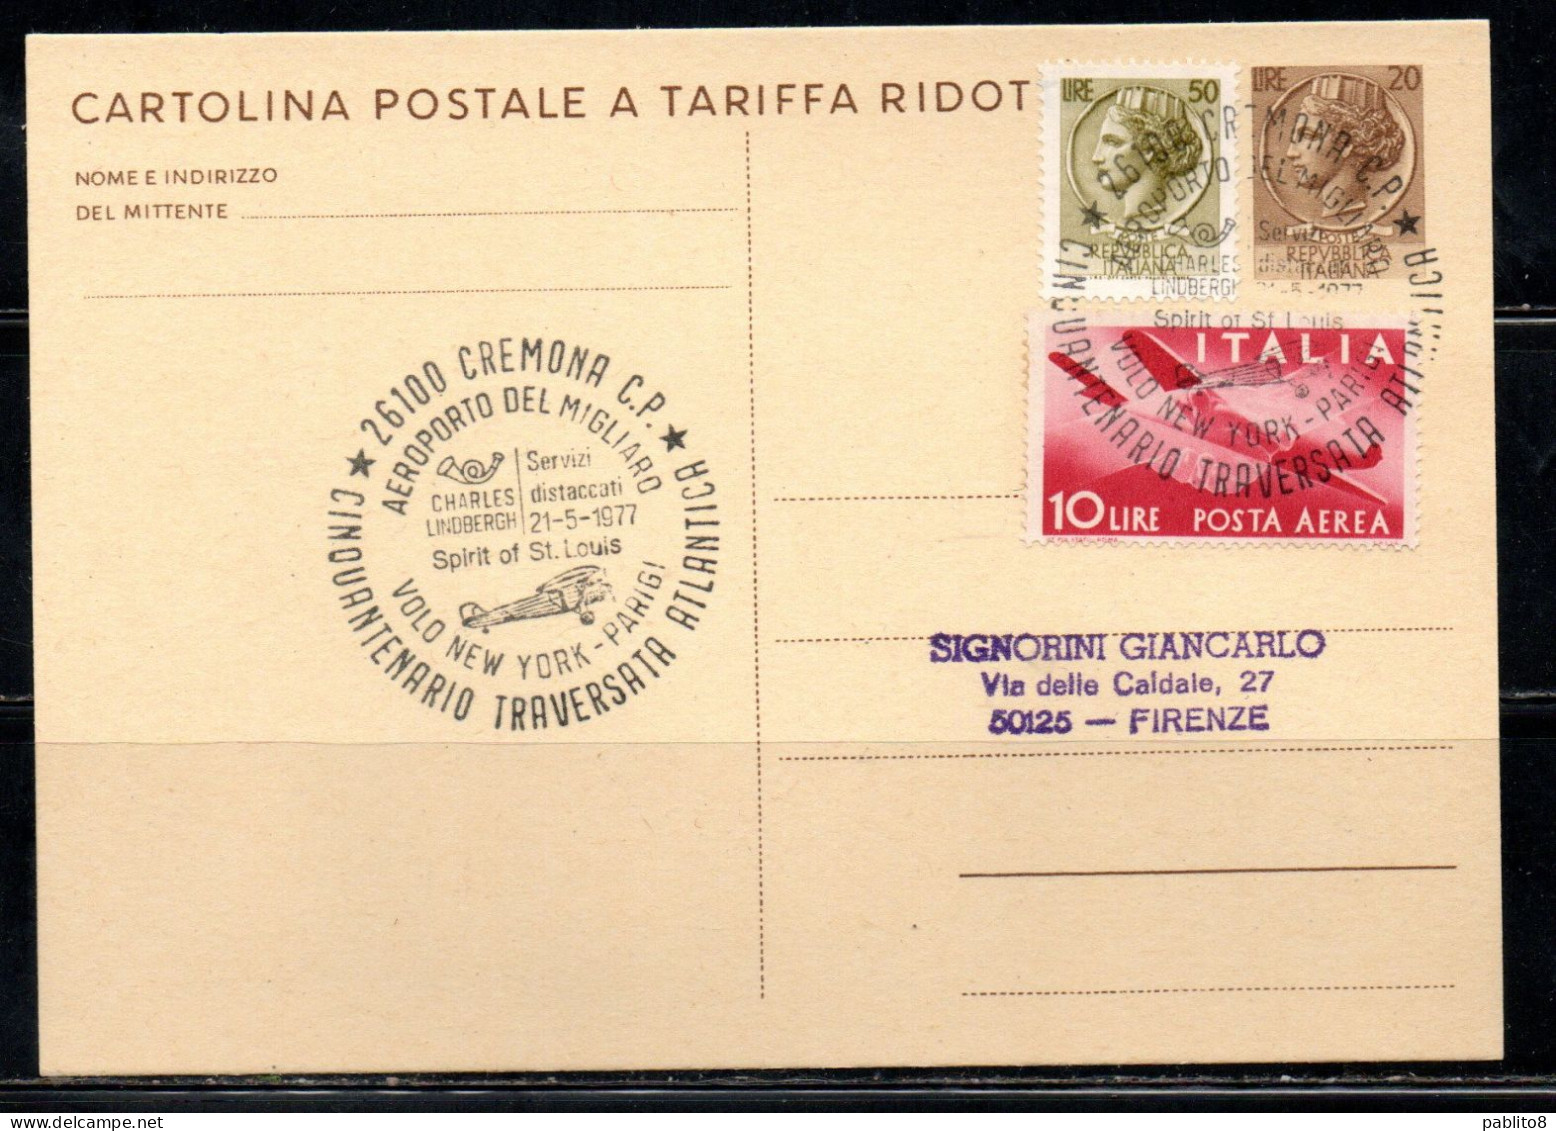 ITALIA REPUBBLICA ITALY REPUBLIC CARTOLINA POSTALE 21-5-1977 CINQUANTENARIO TRAVERSATA ATLANTICA CREMONA VIAGGIATA - Entero Postal